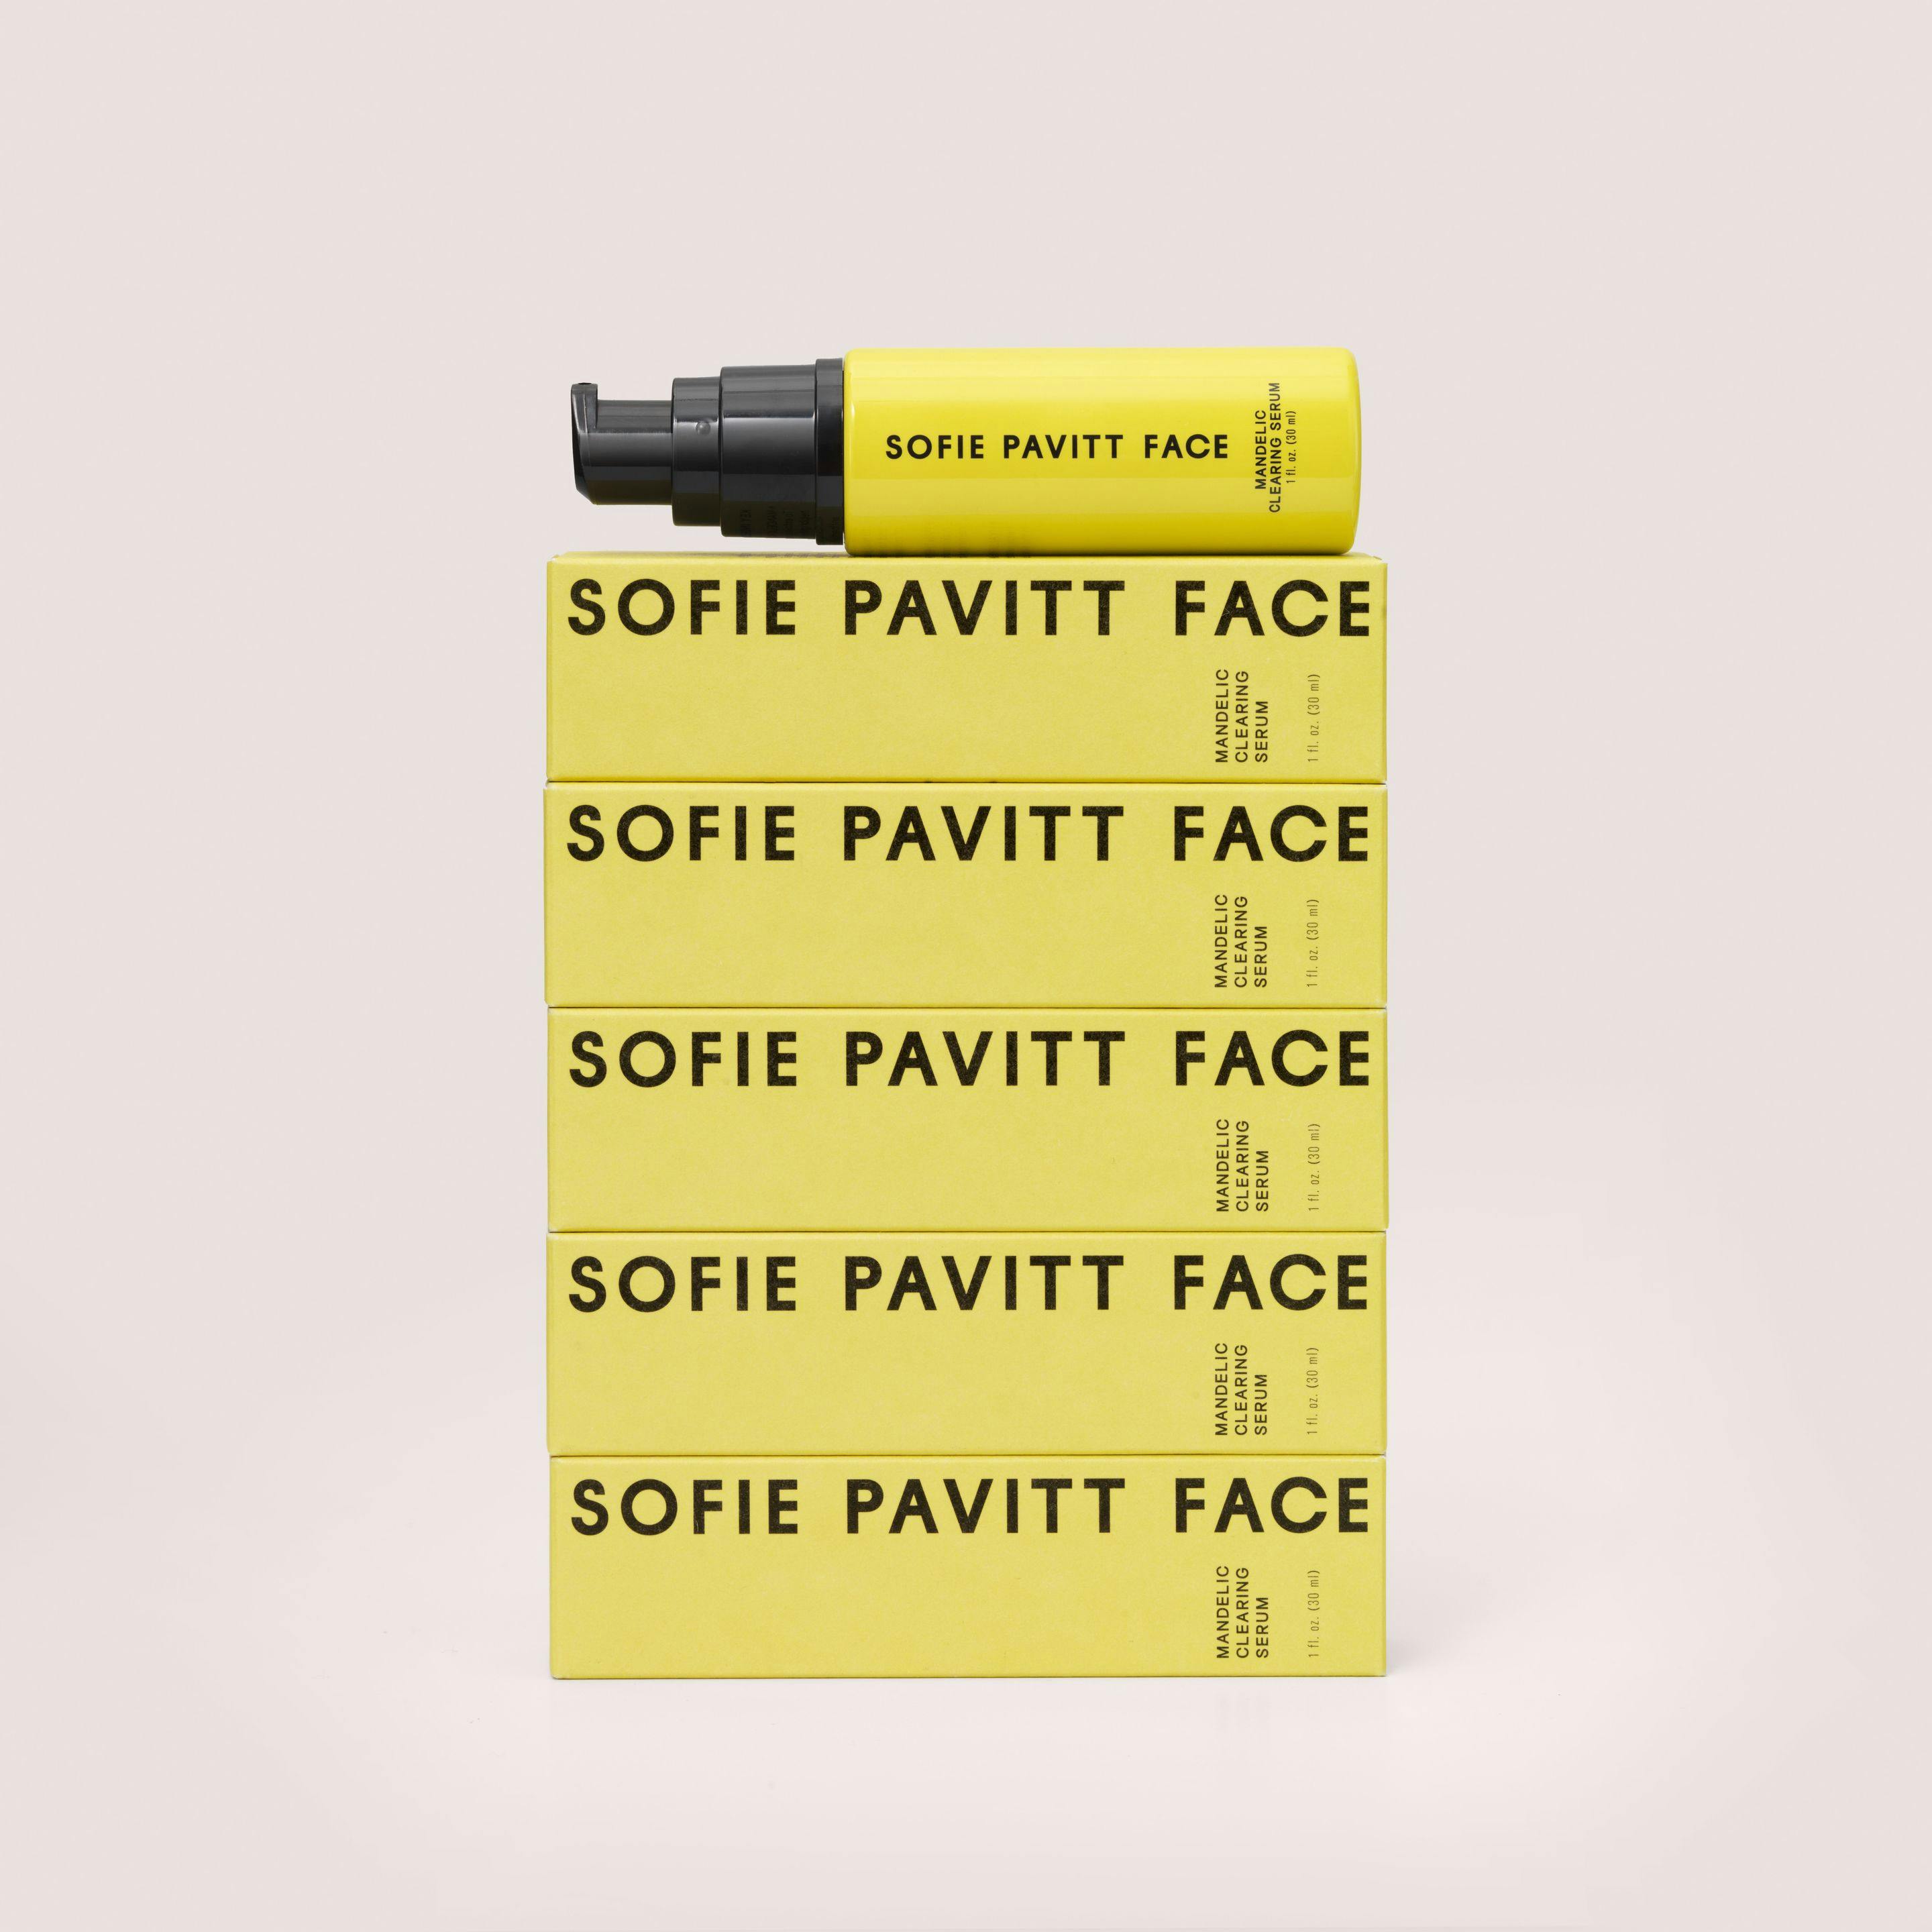 Cover image from Sofie Pavitt Face